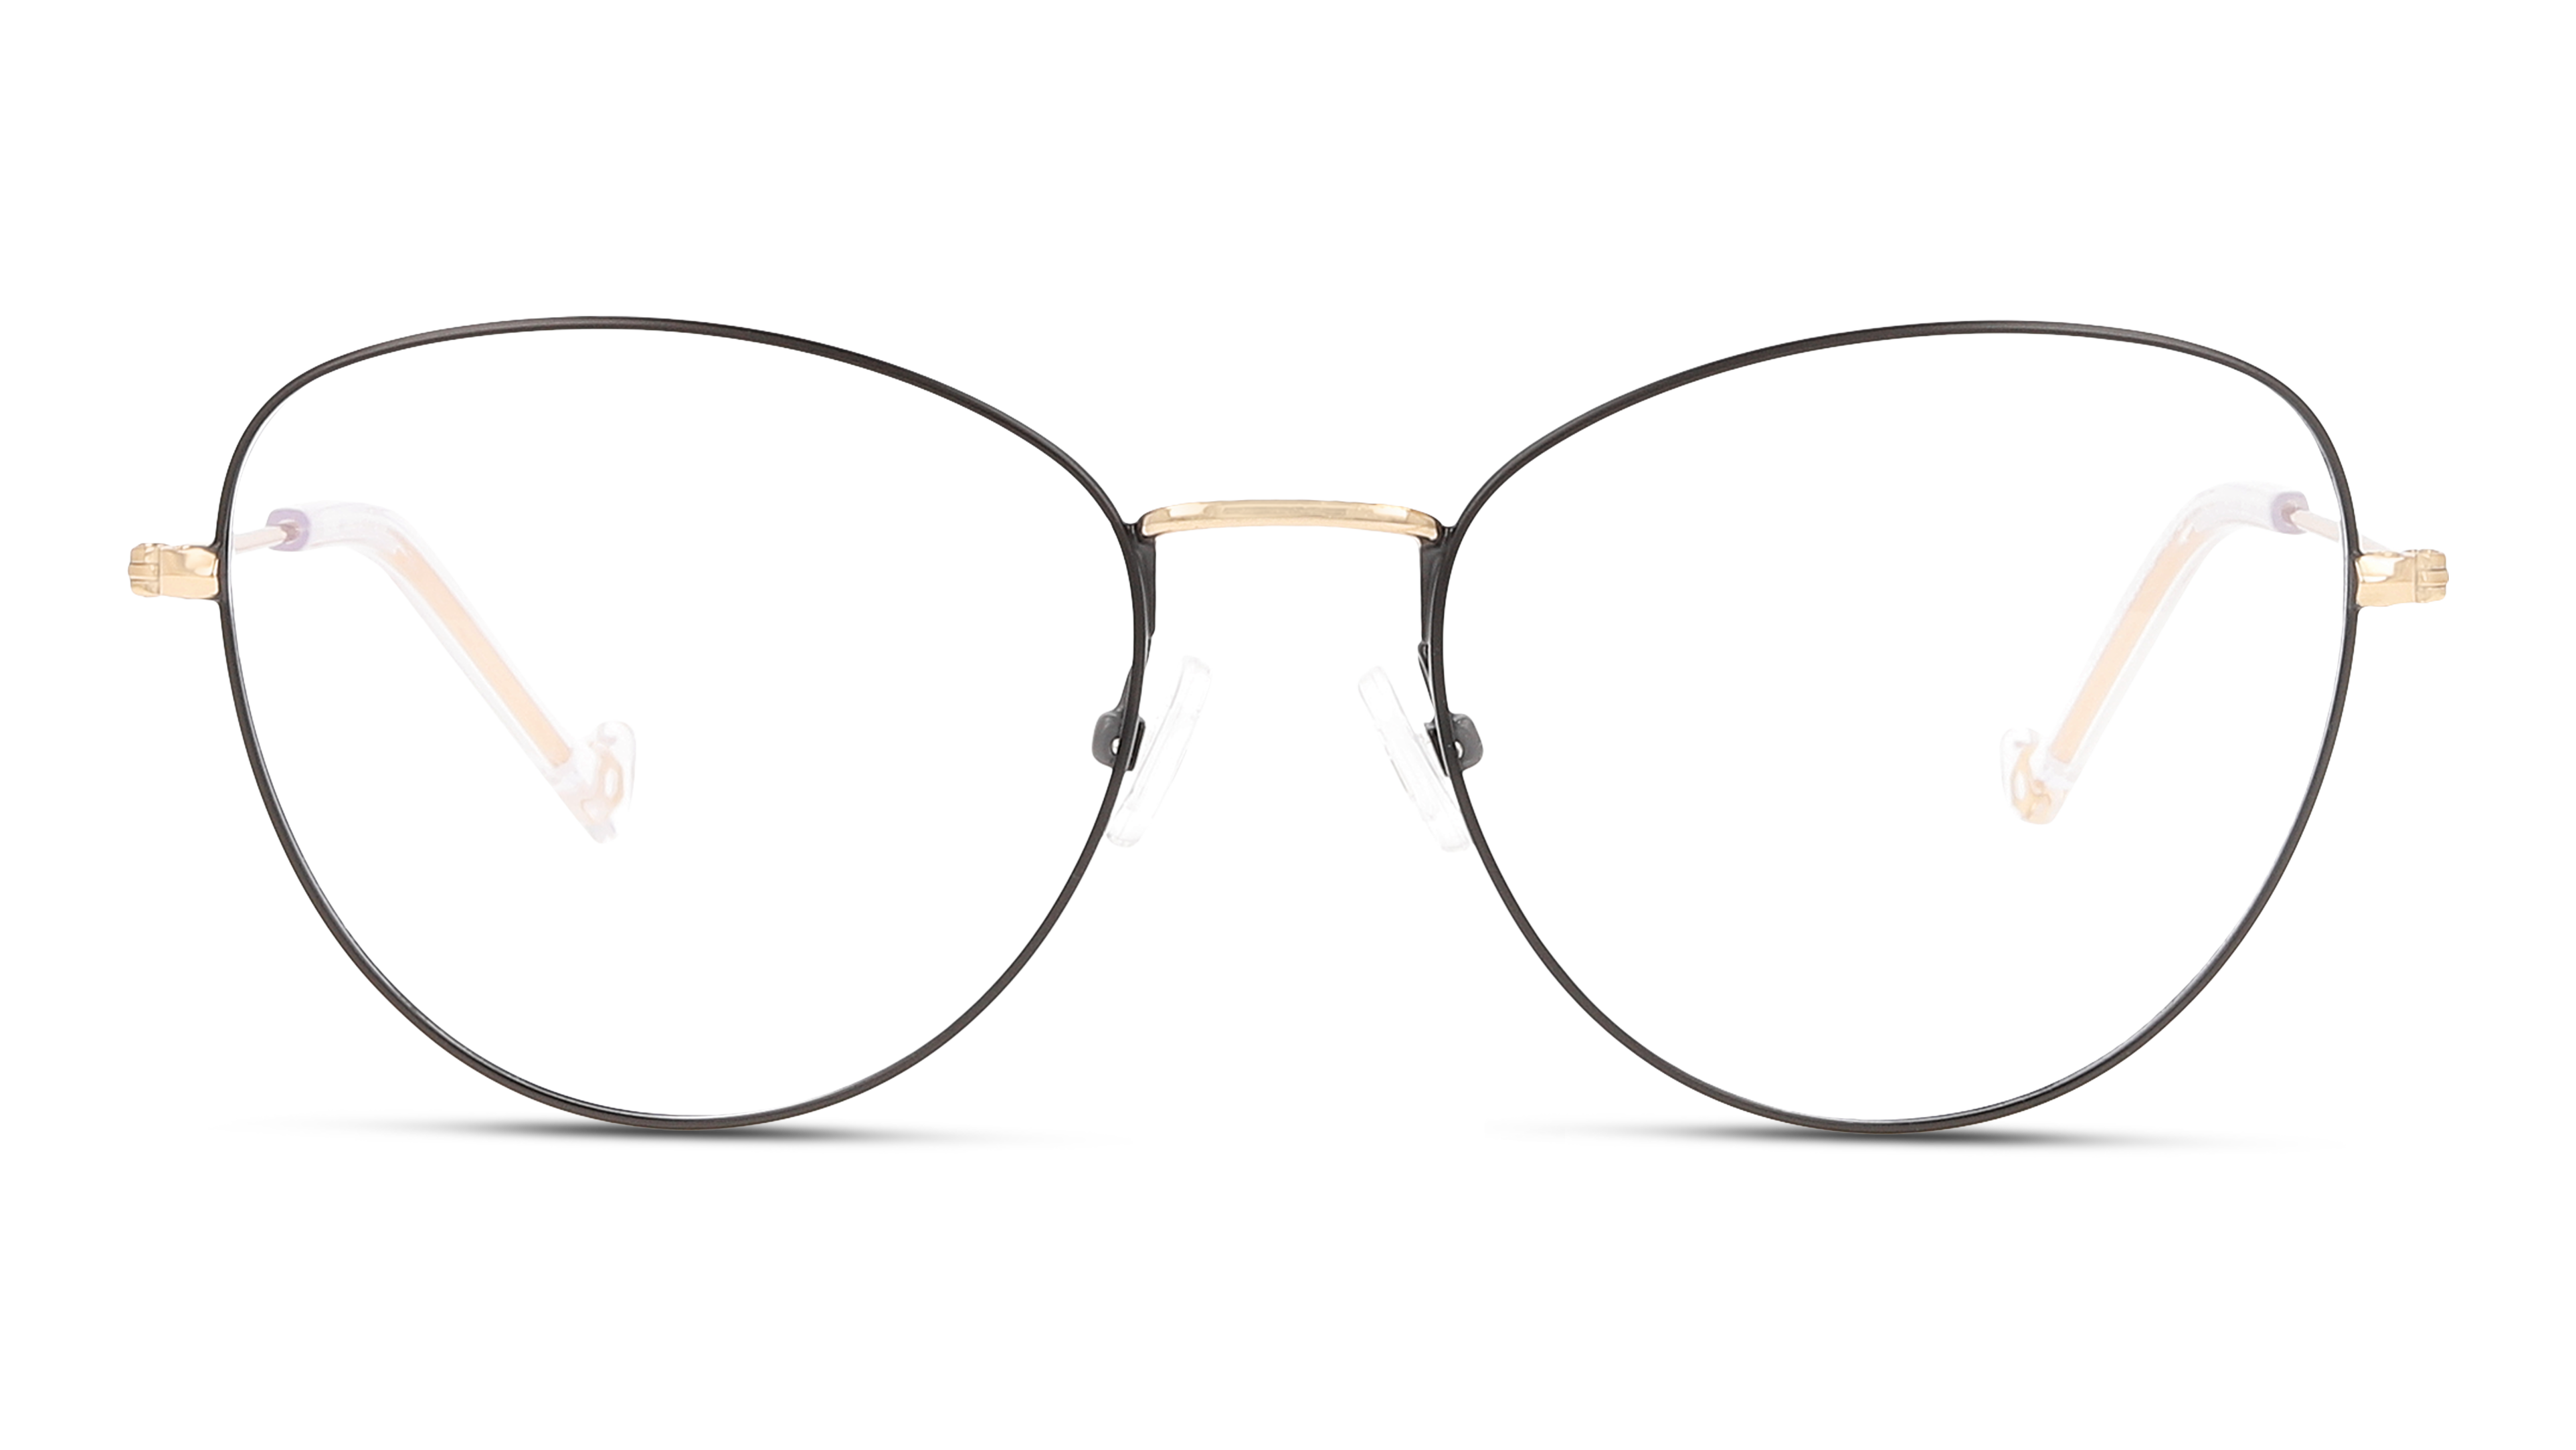 Front Unofficial UNOF0077 (BD00) Glasses Transparent / Black